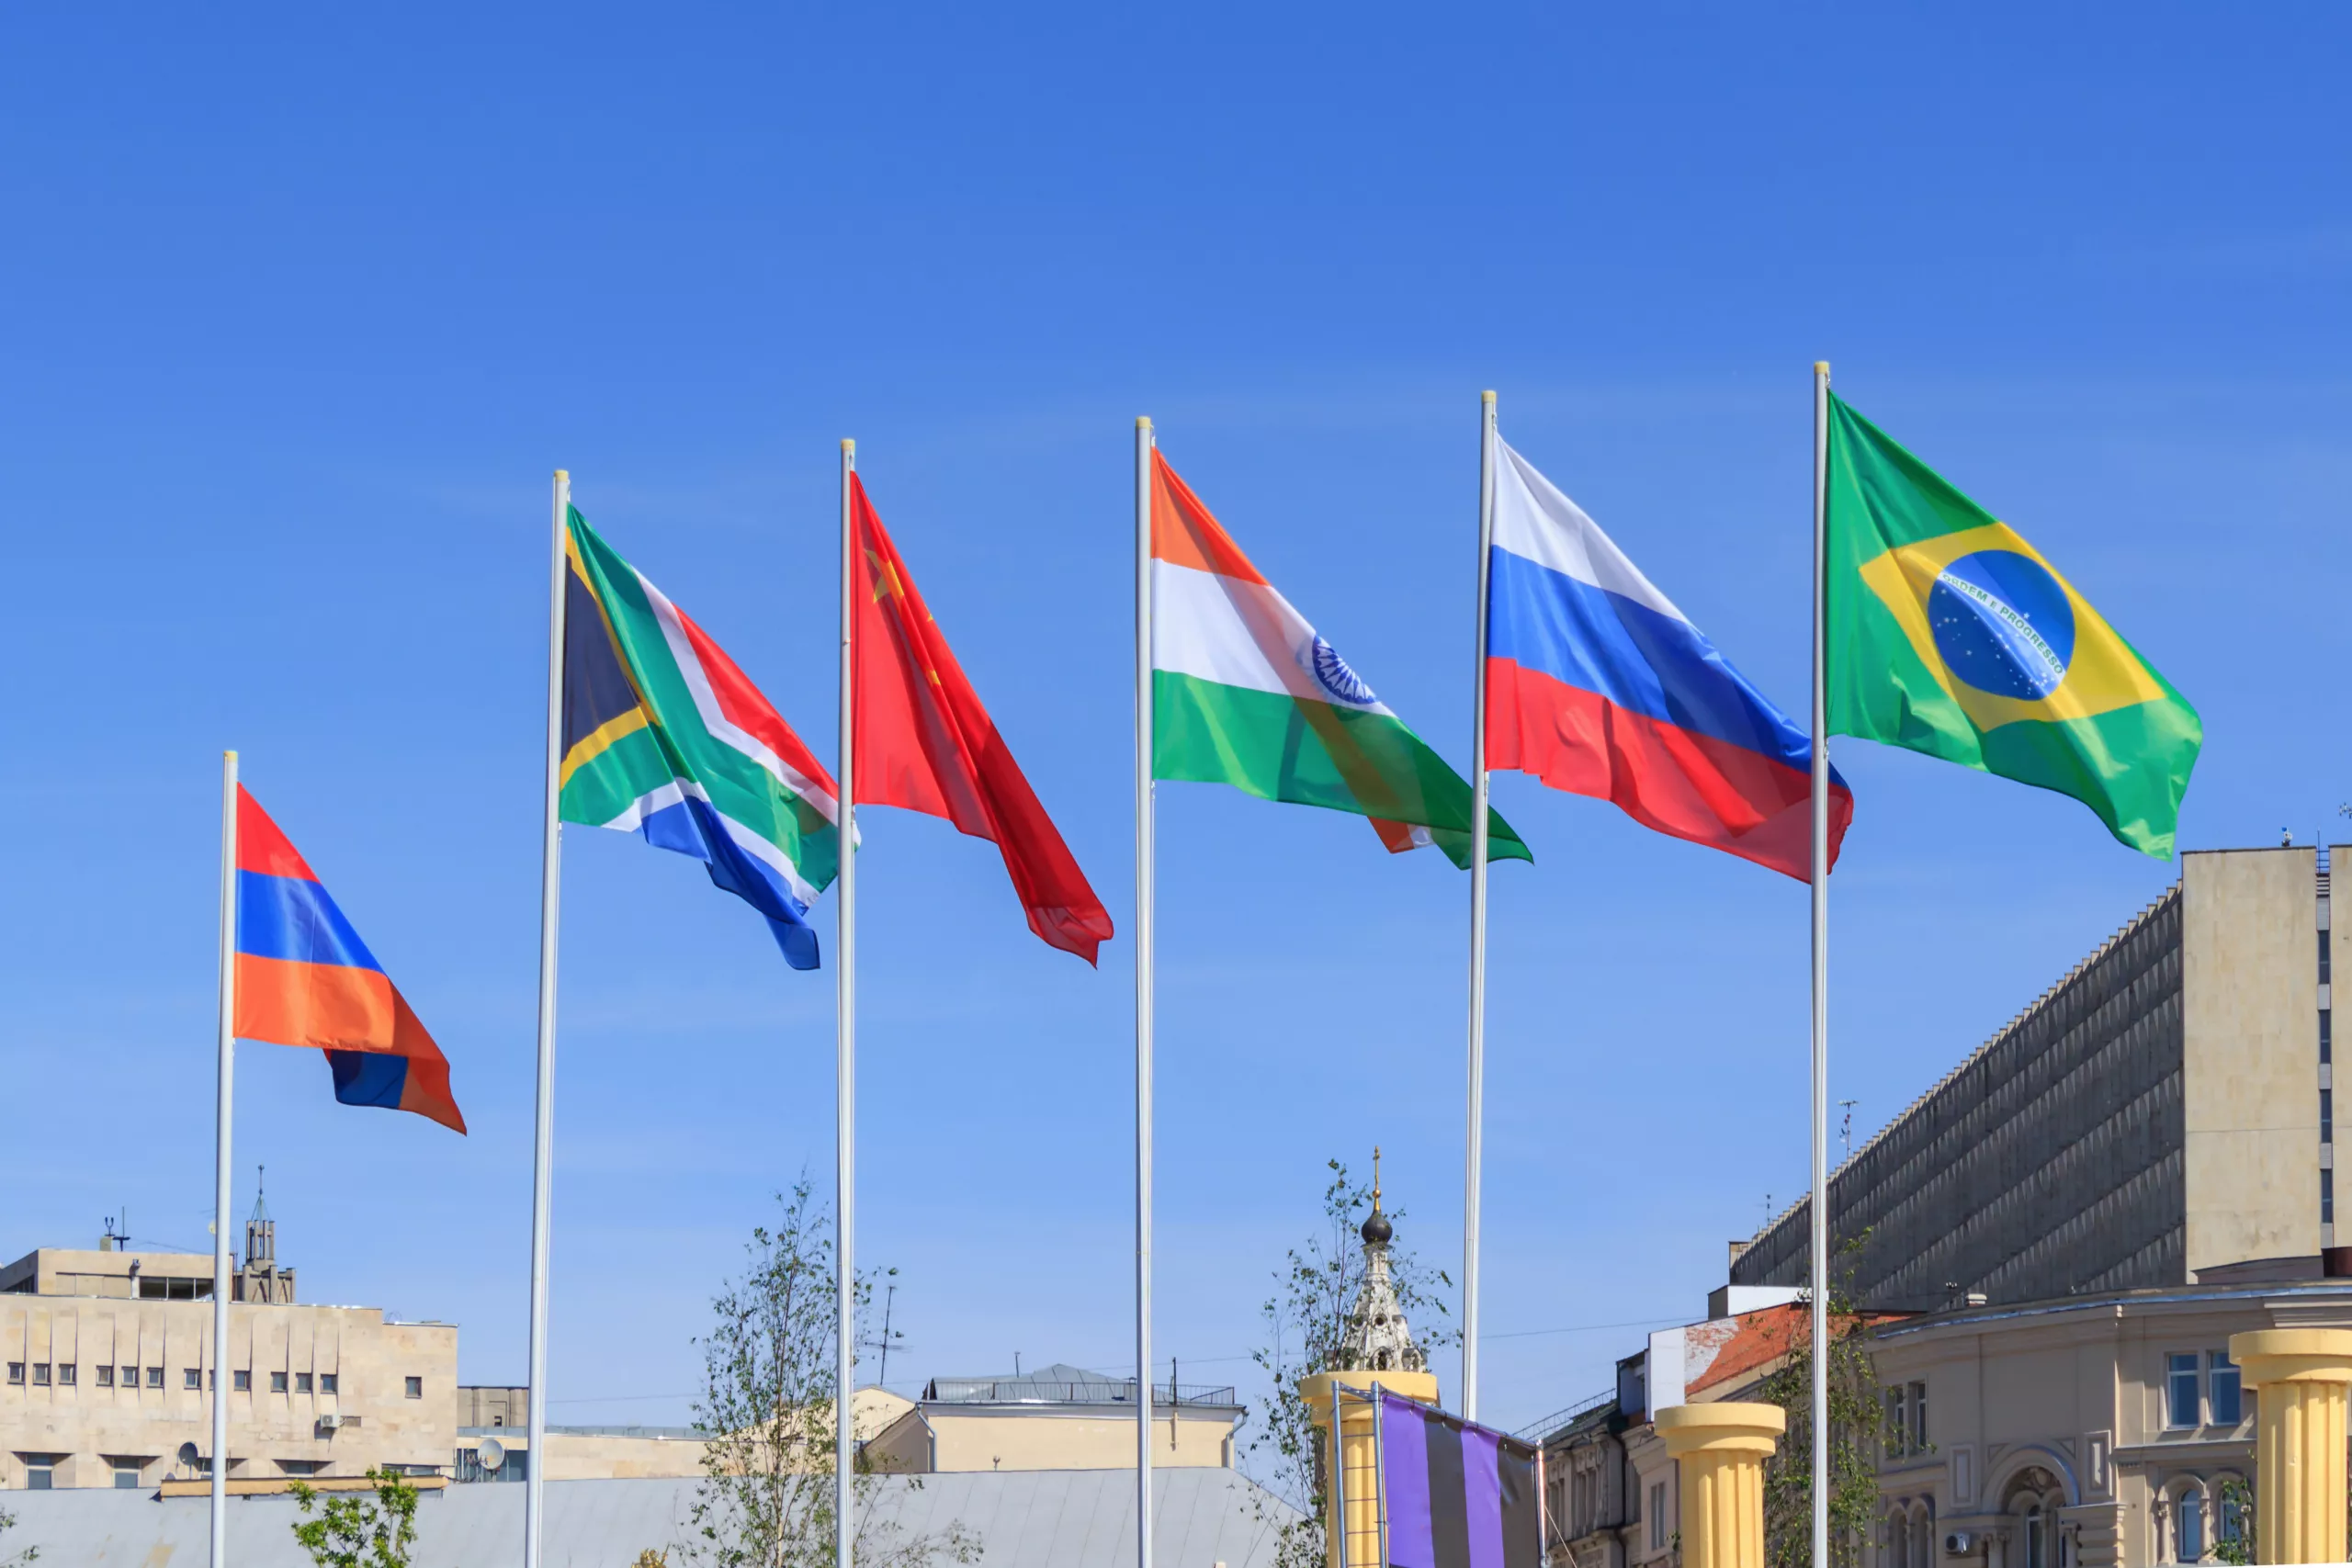 Flags of BRICS